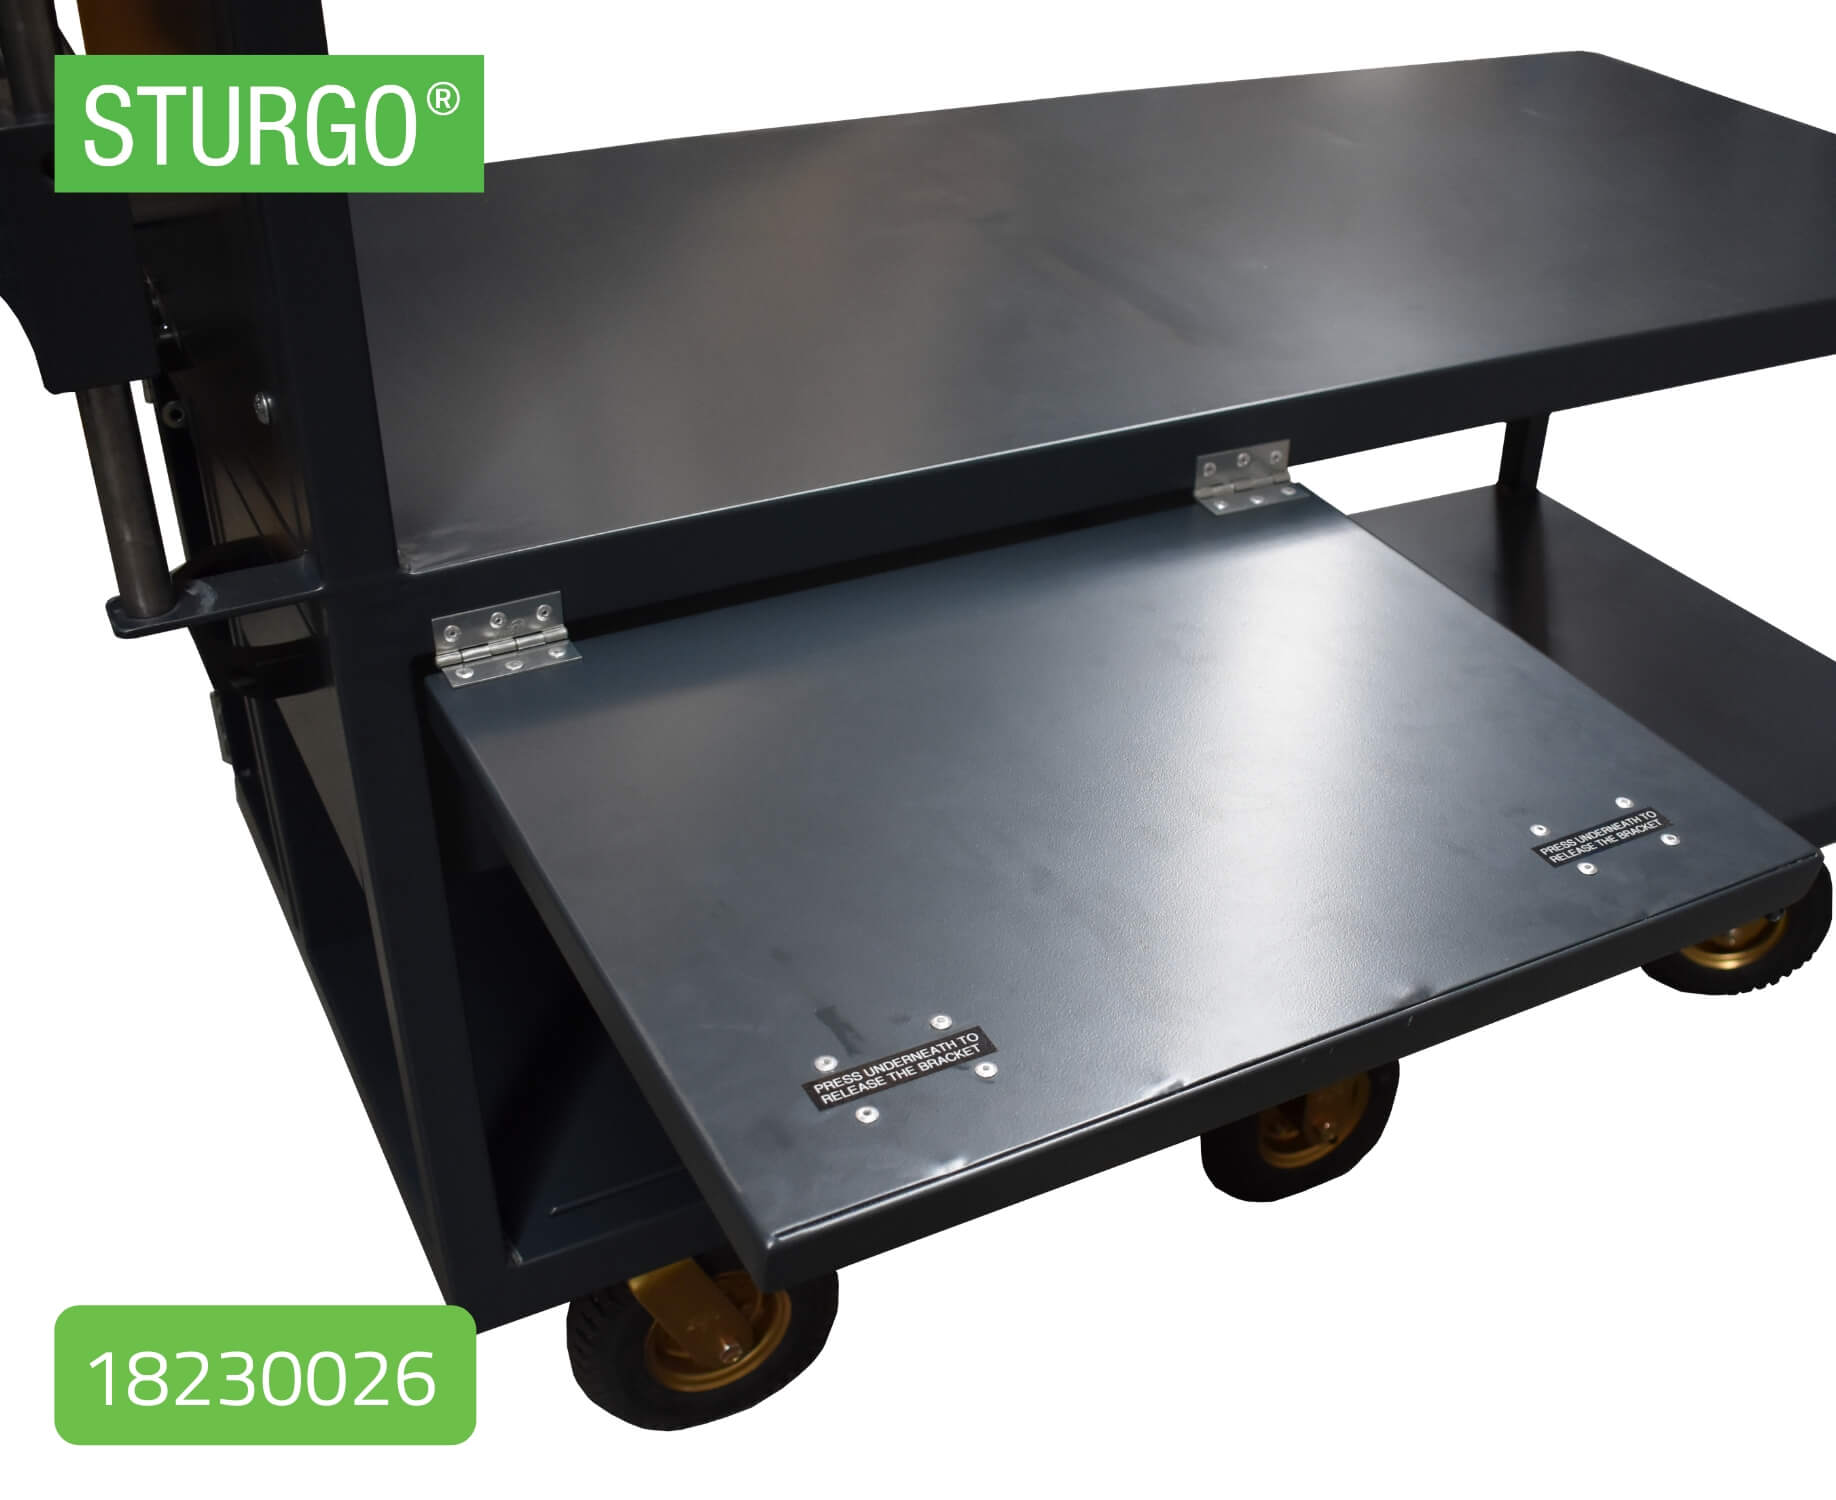 Custom STURGO® Workstation Picking Trolley